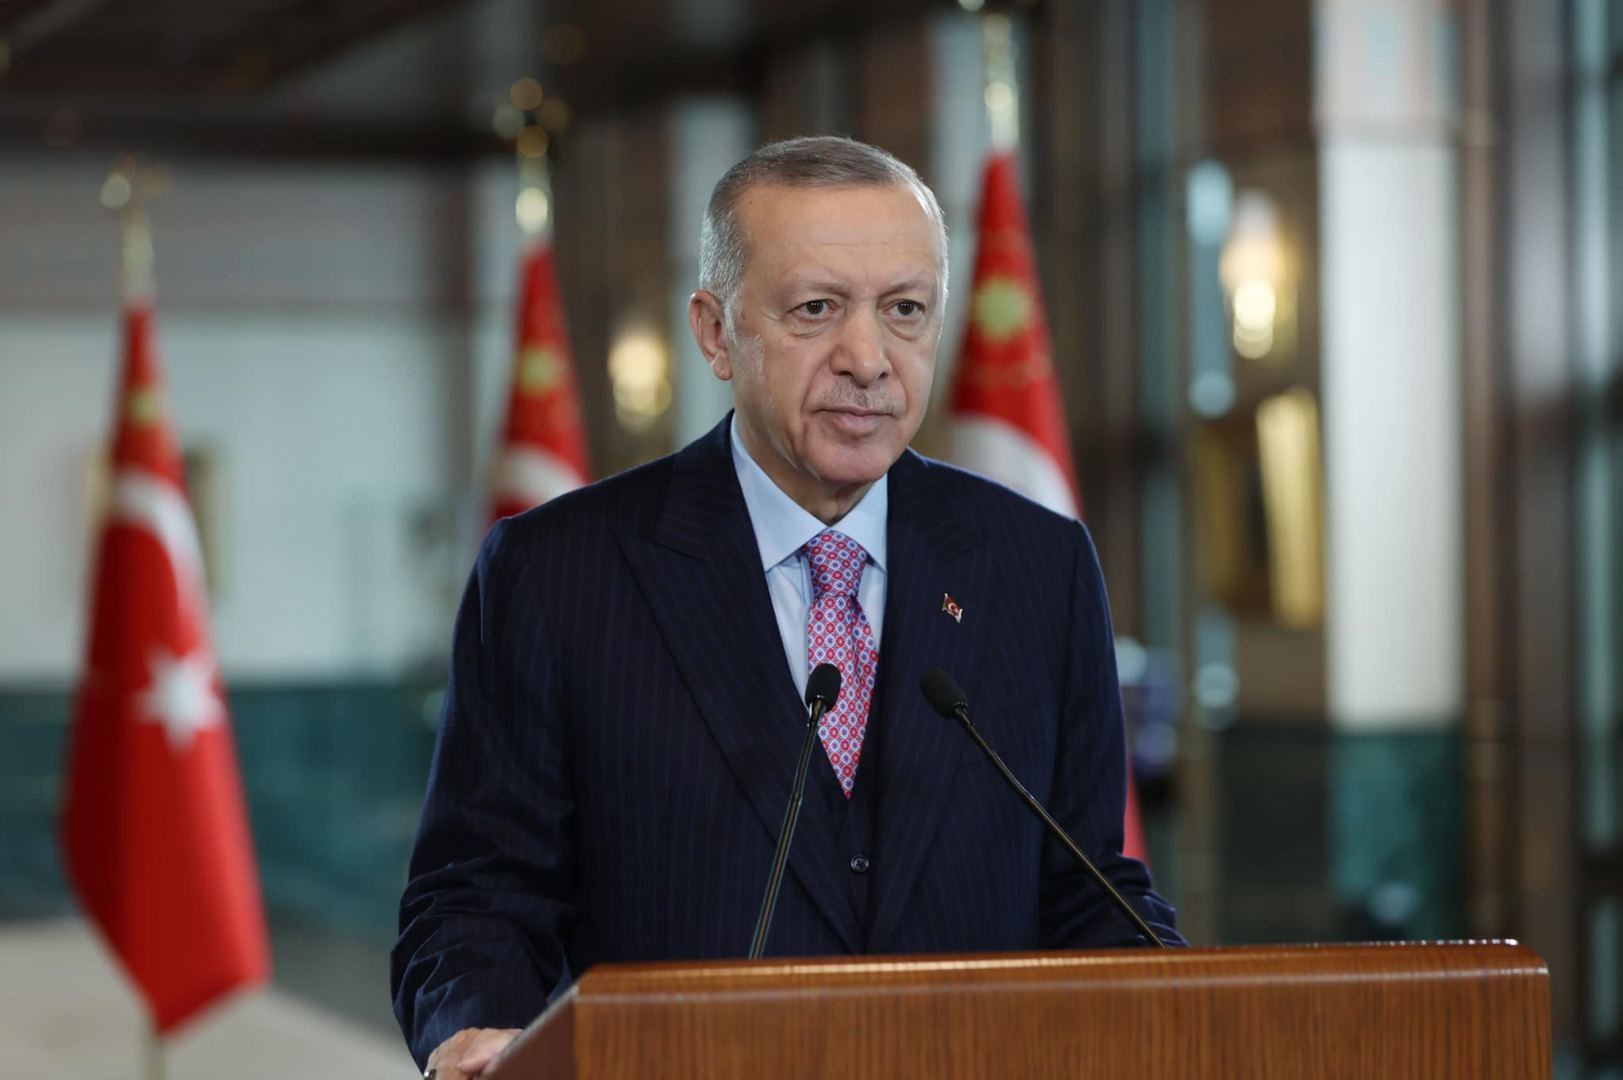 Turkic world must continue to support Azerbaijan in opening Zangezur corridor - Turkish President